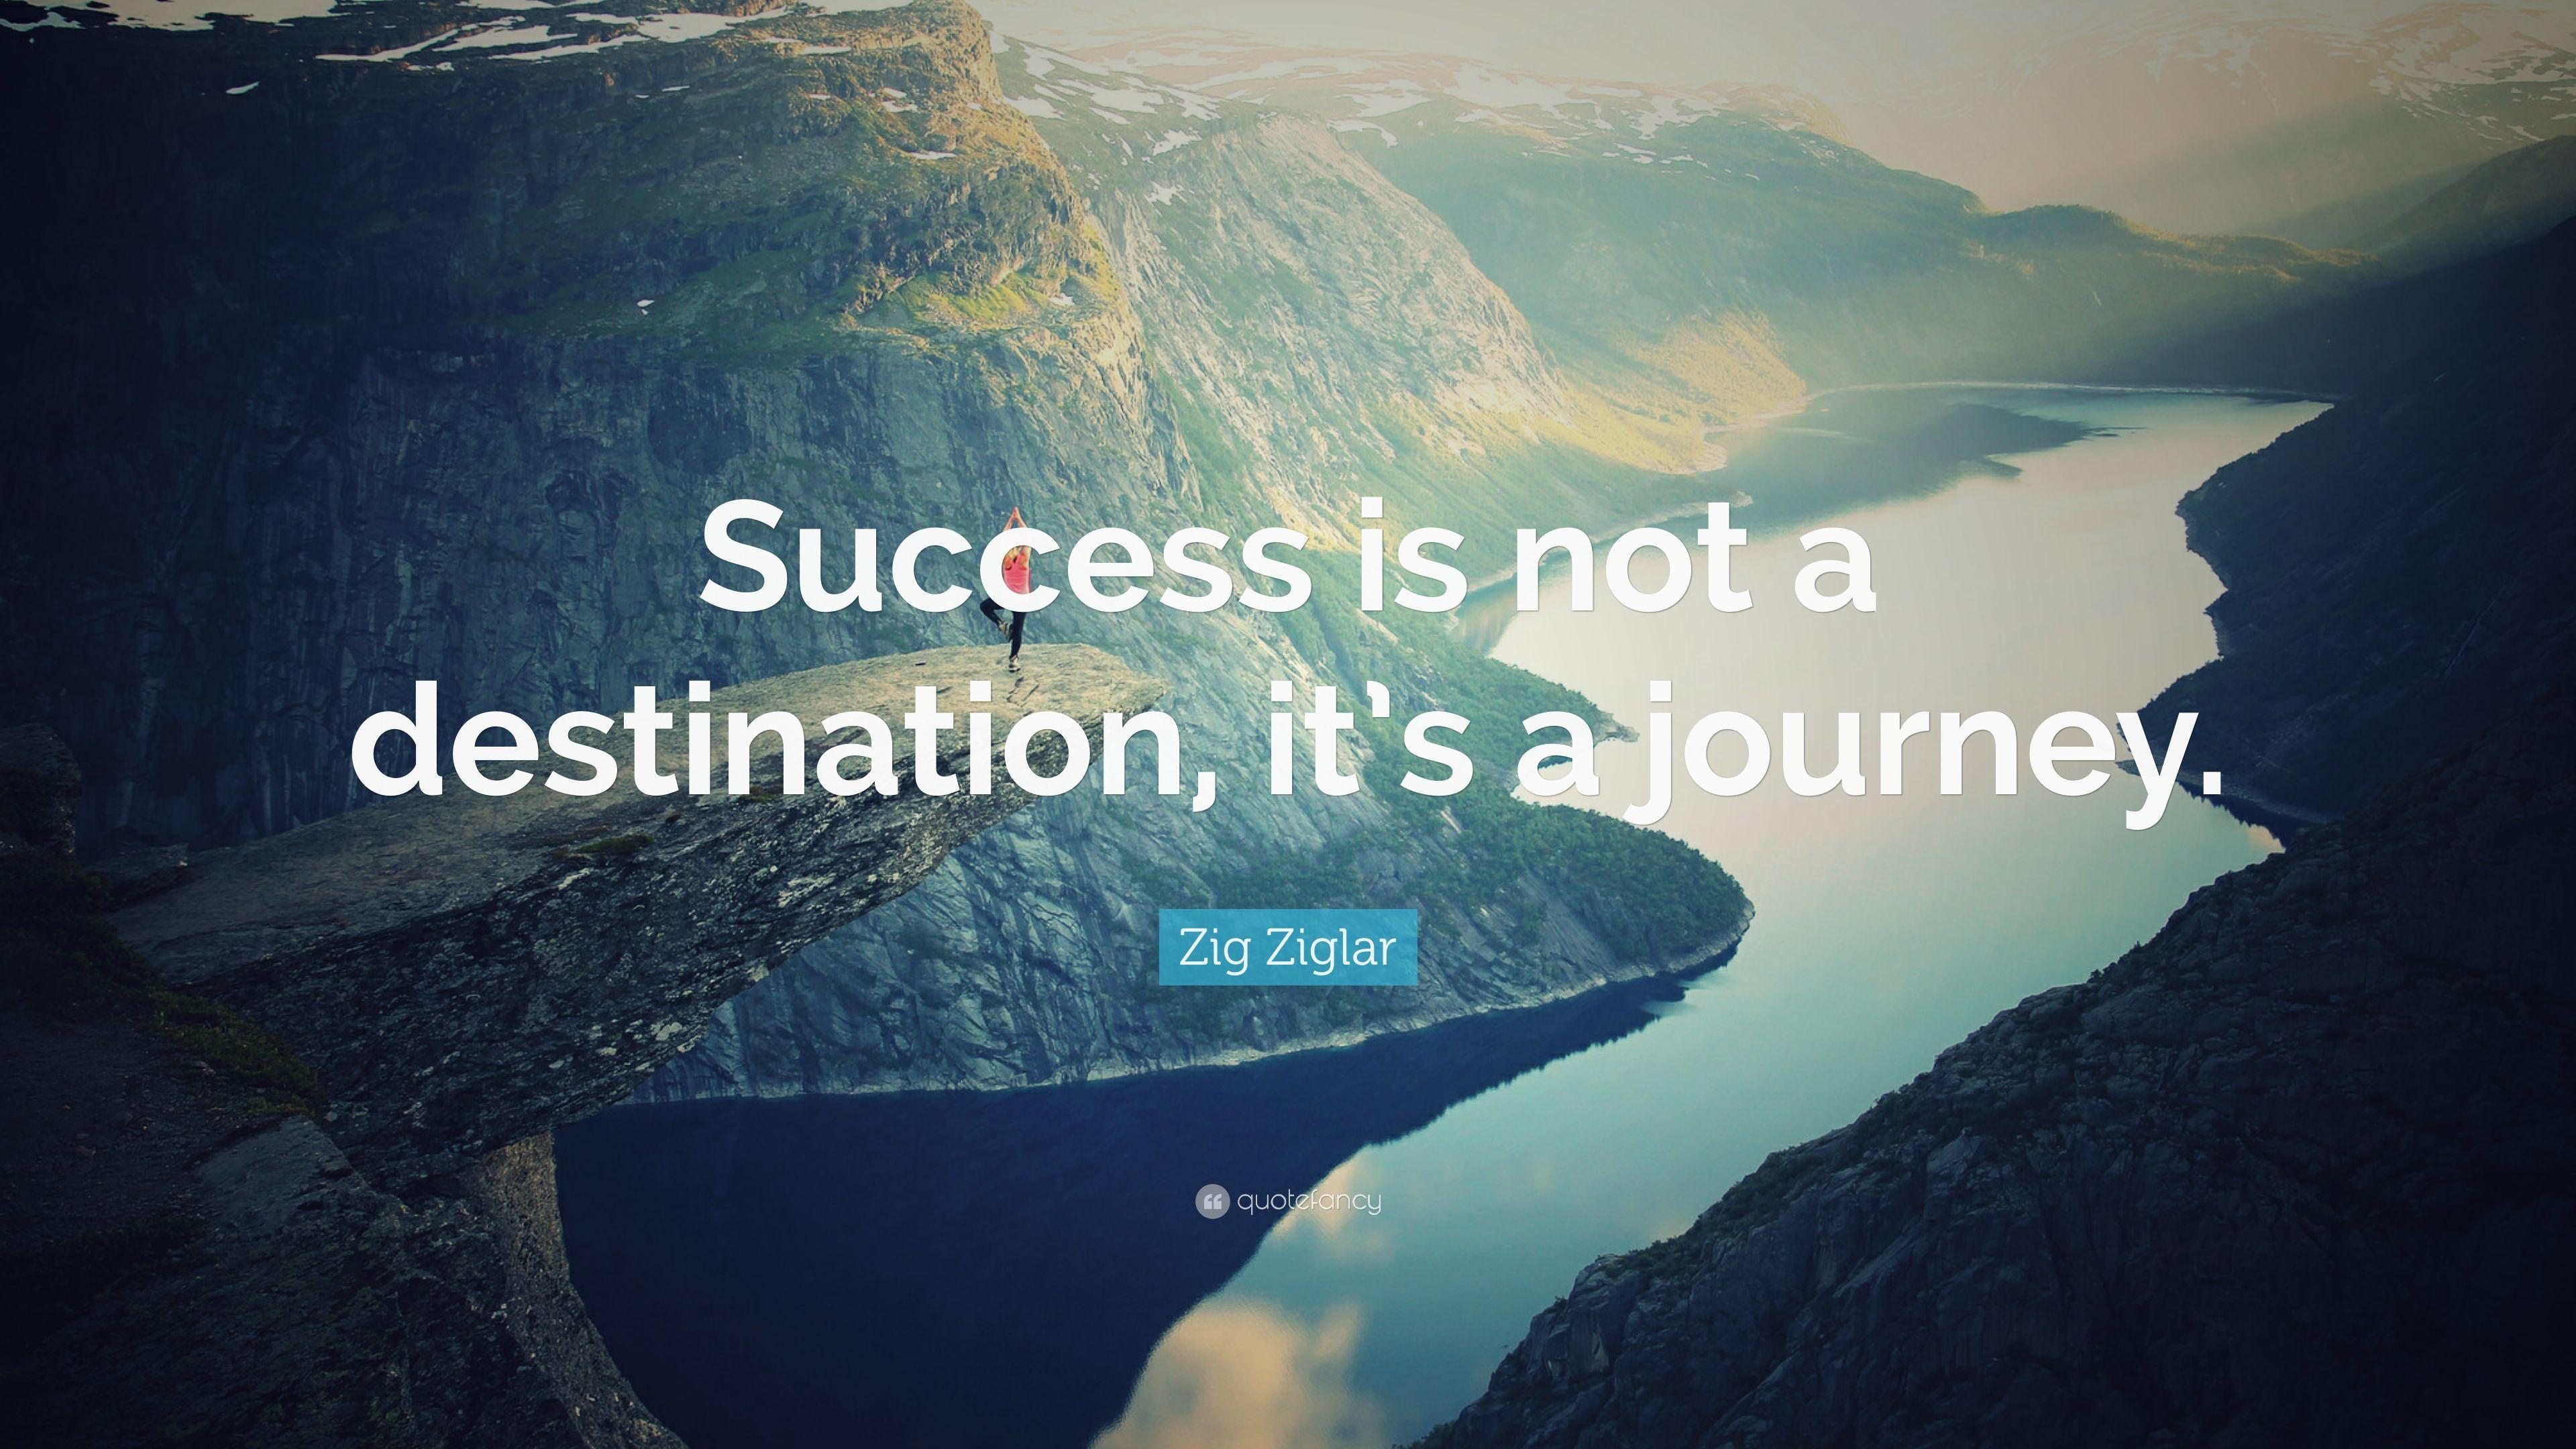 Zig Ziglar Quote: “Success is not a destination, it's a journey